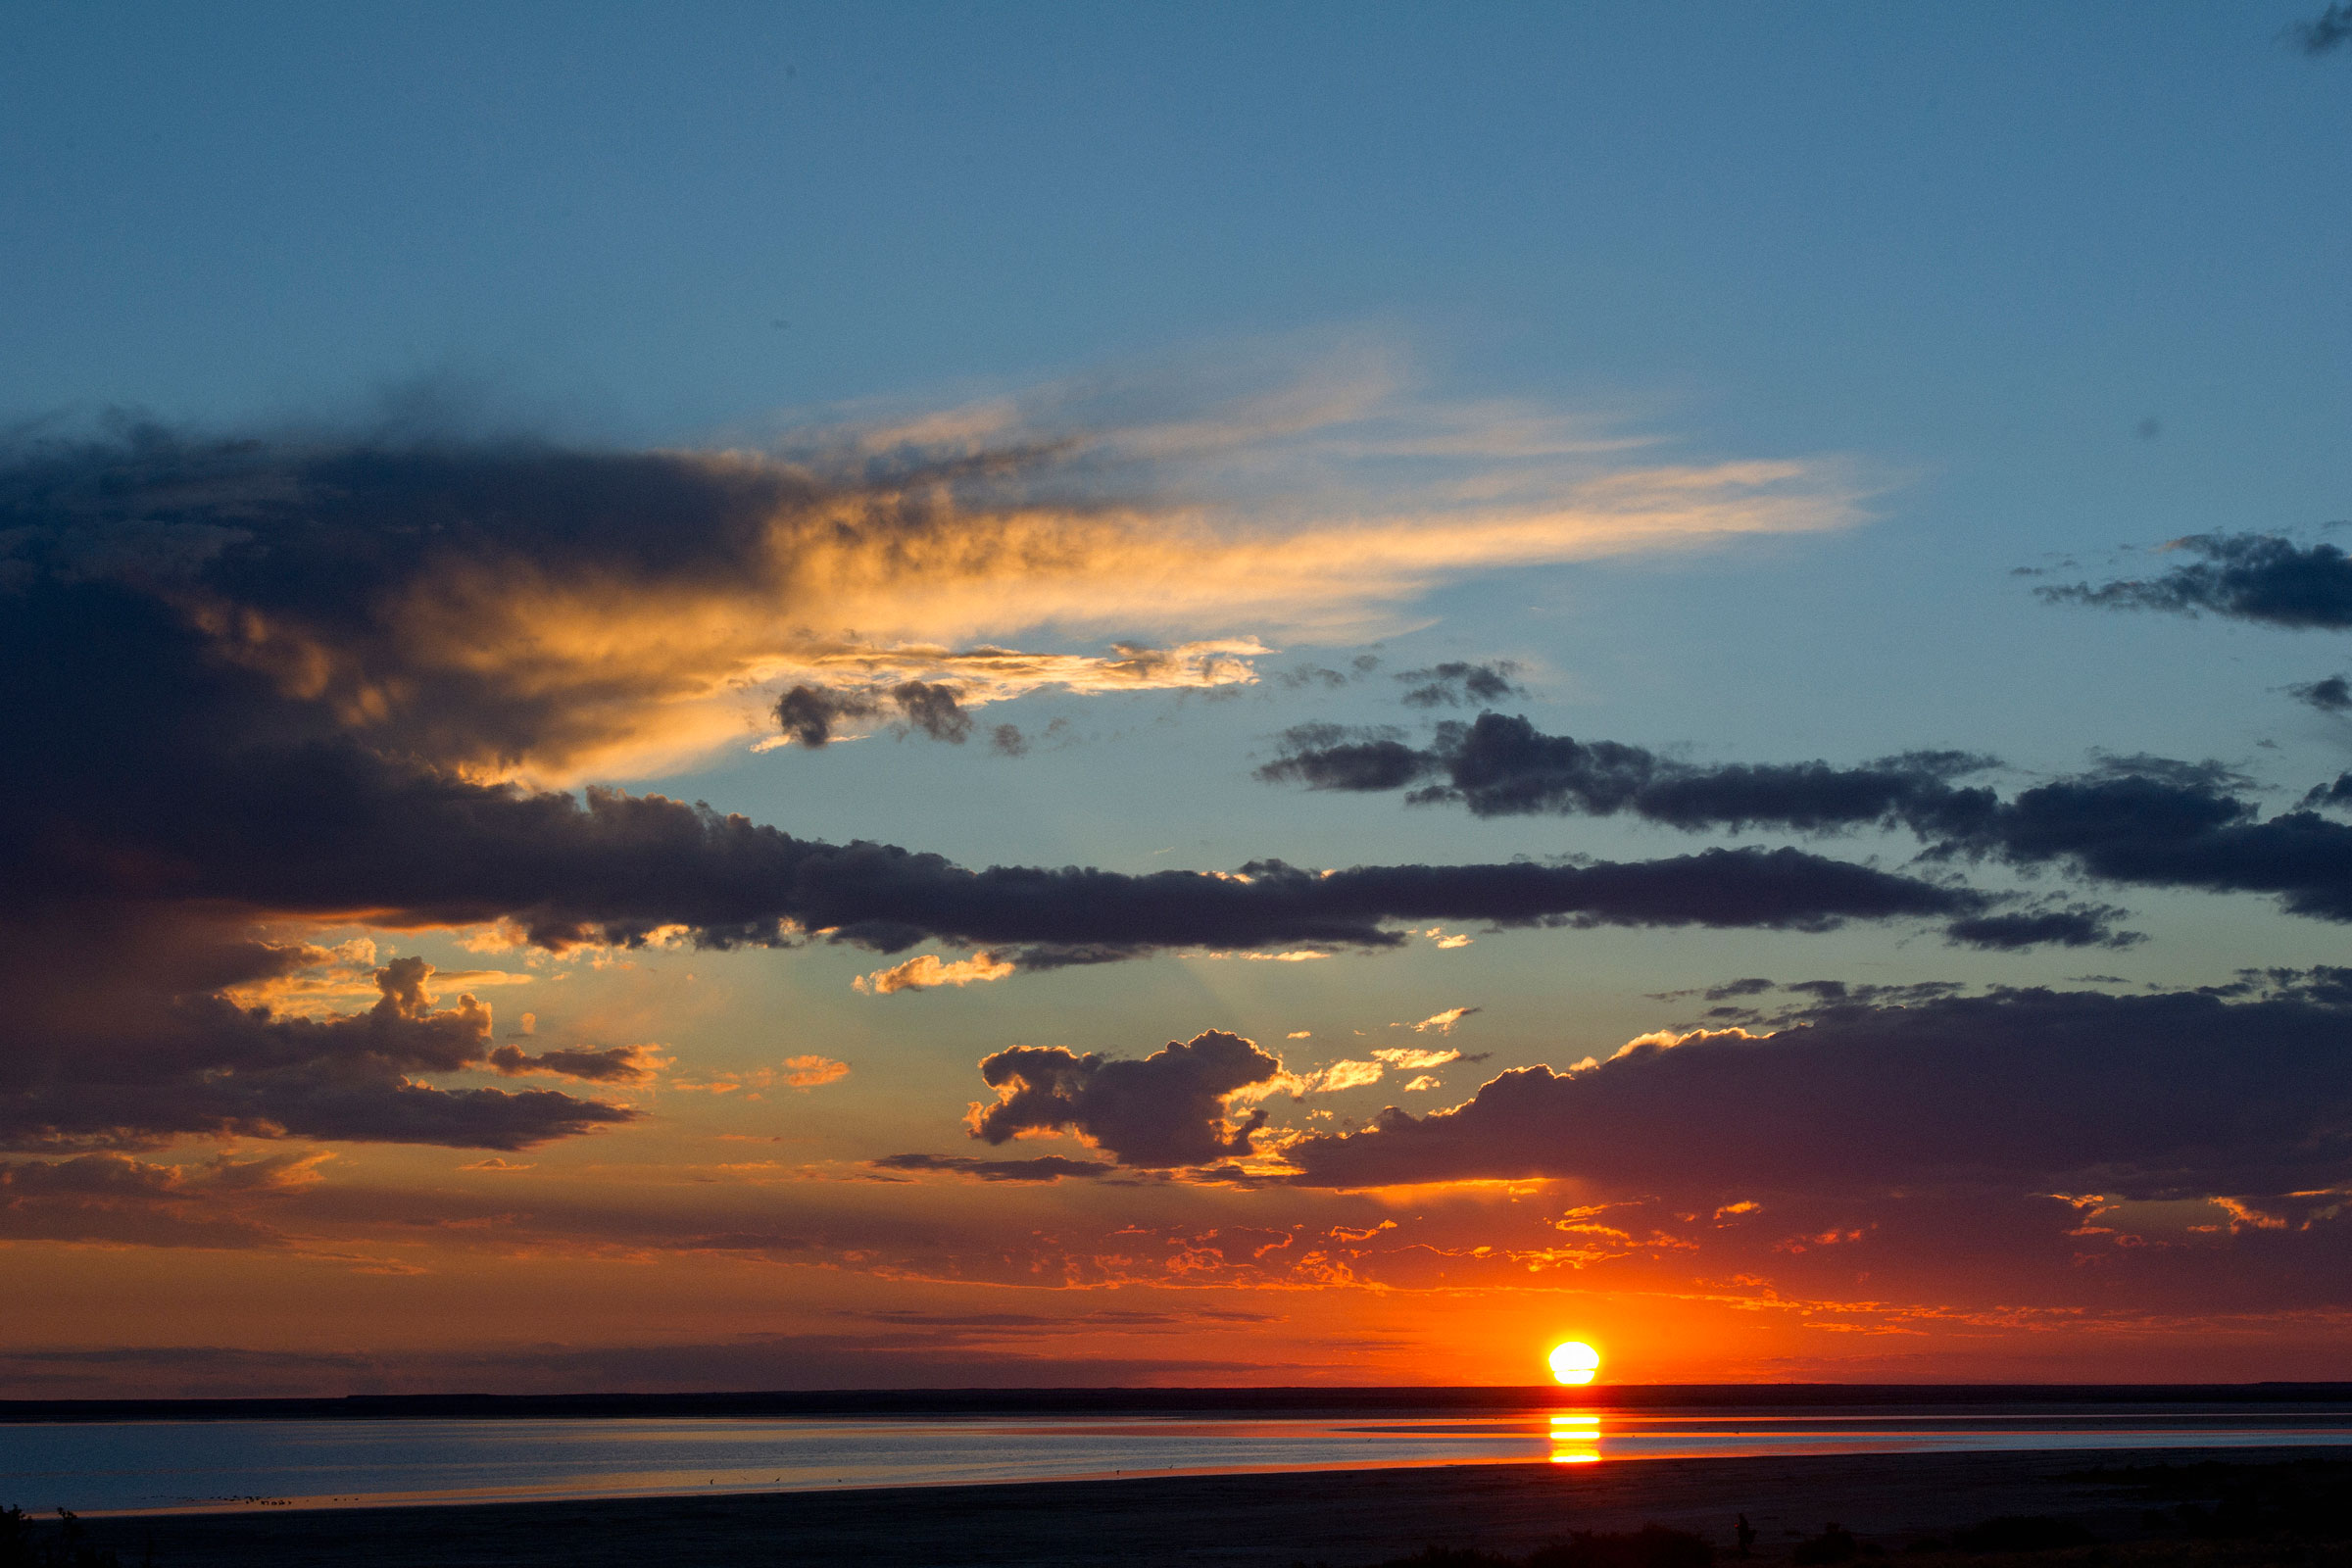 Sunset at Lake Eyre, South Australia.